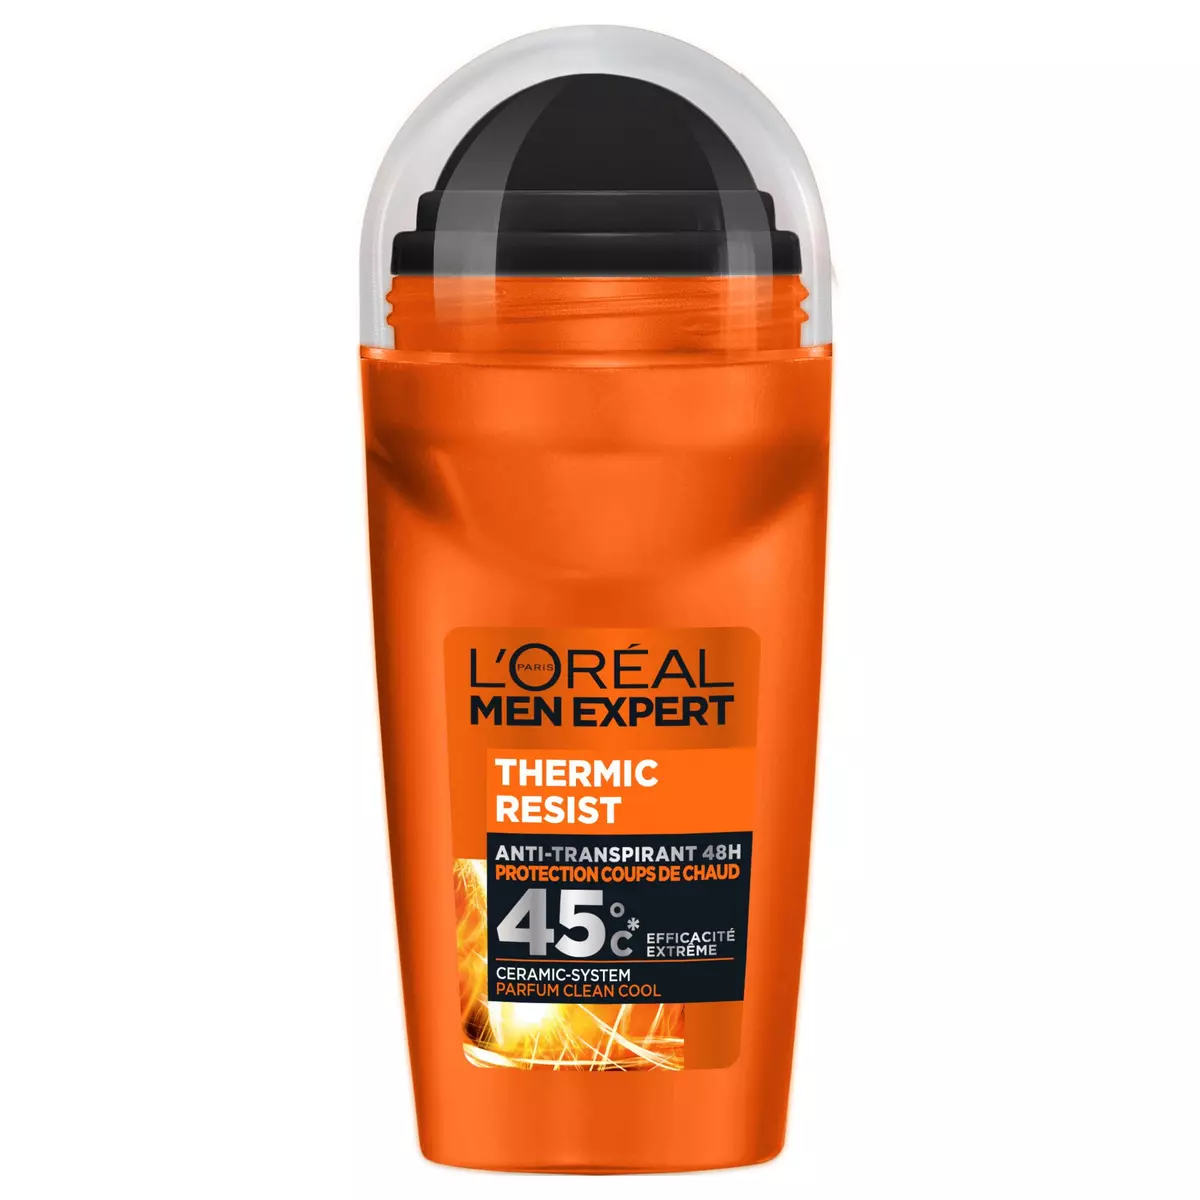 L'OREAL Men Expert Déodorant bille 48h thermic resist parfum clean cool 50ml